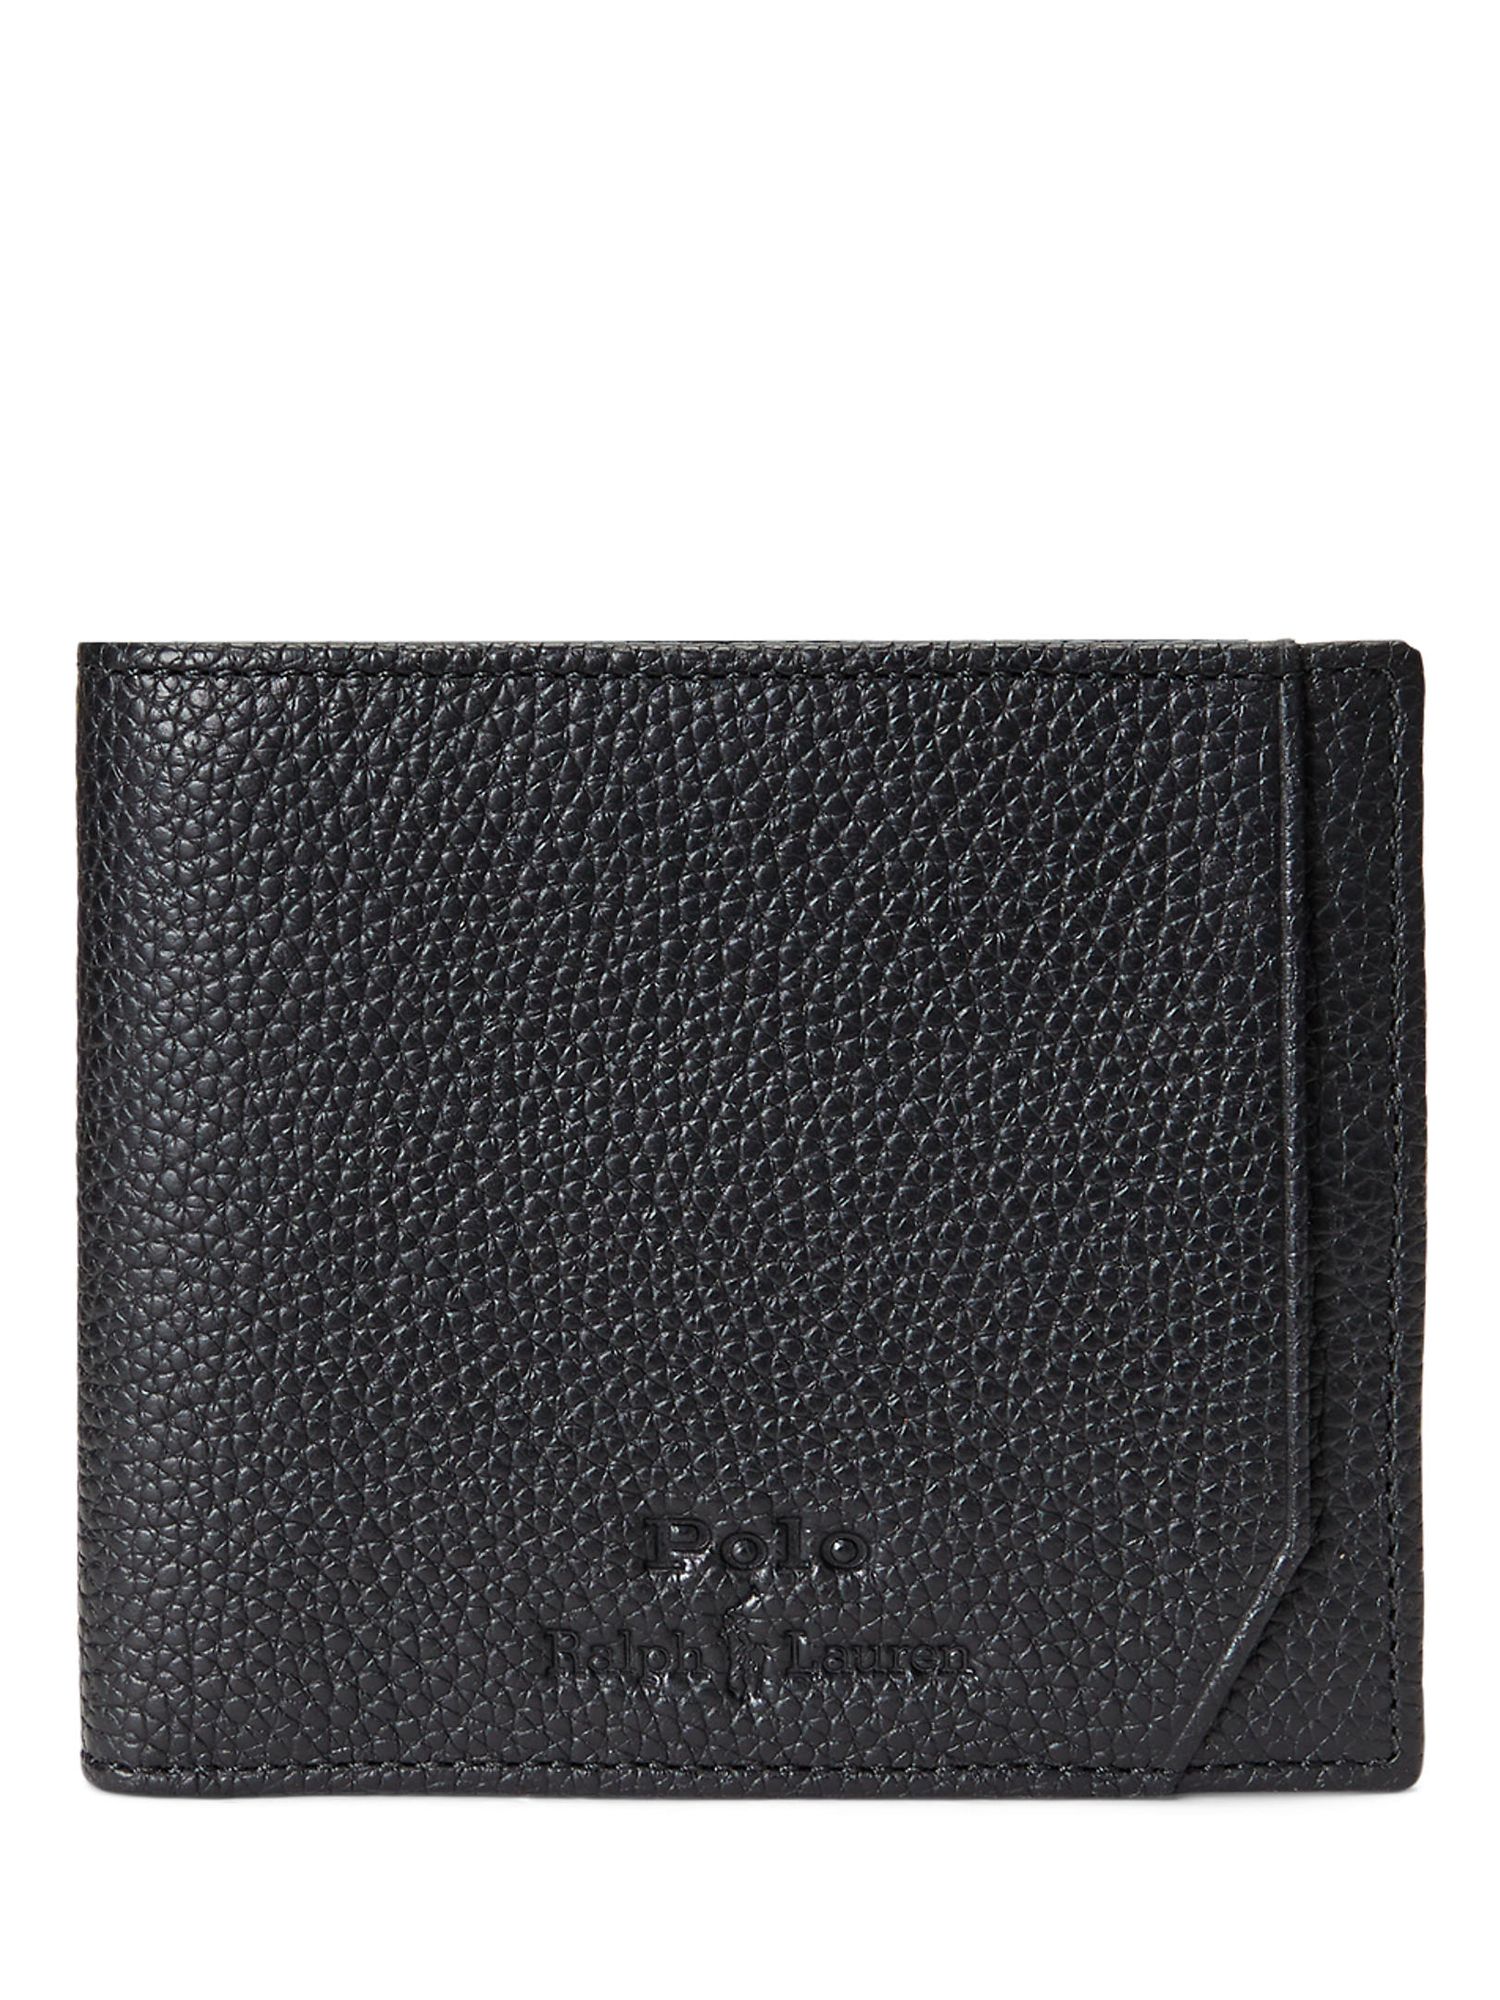 Polo Ralph Lauren Pebbled Leather Wallet